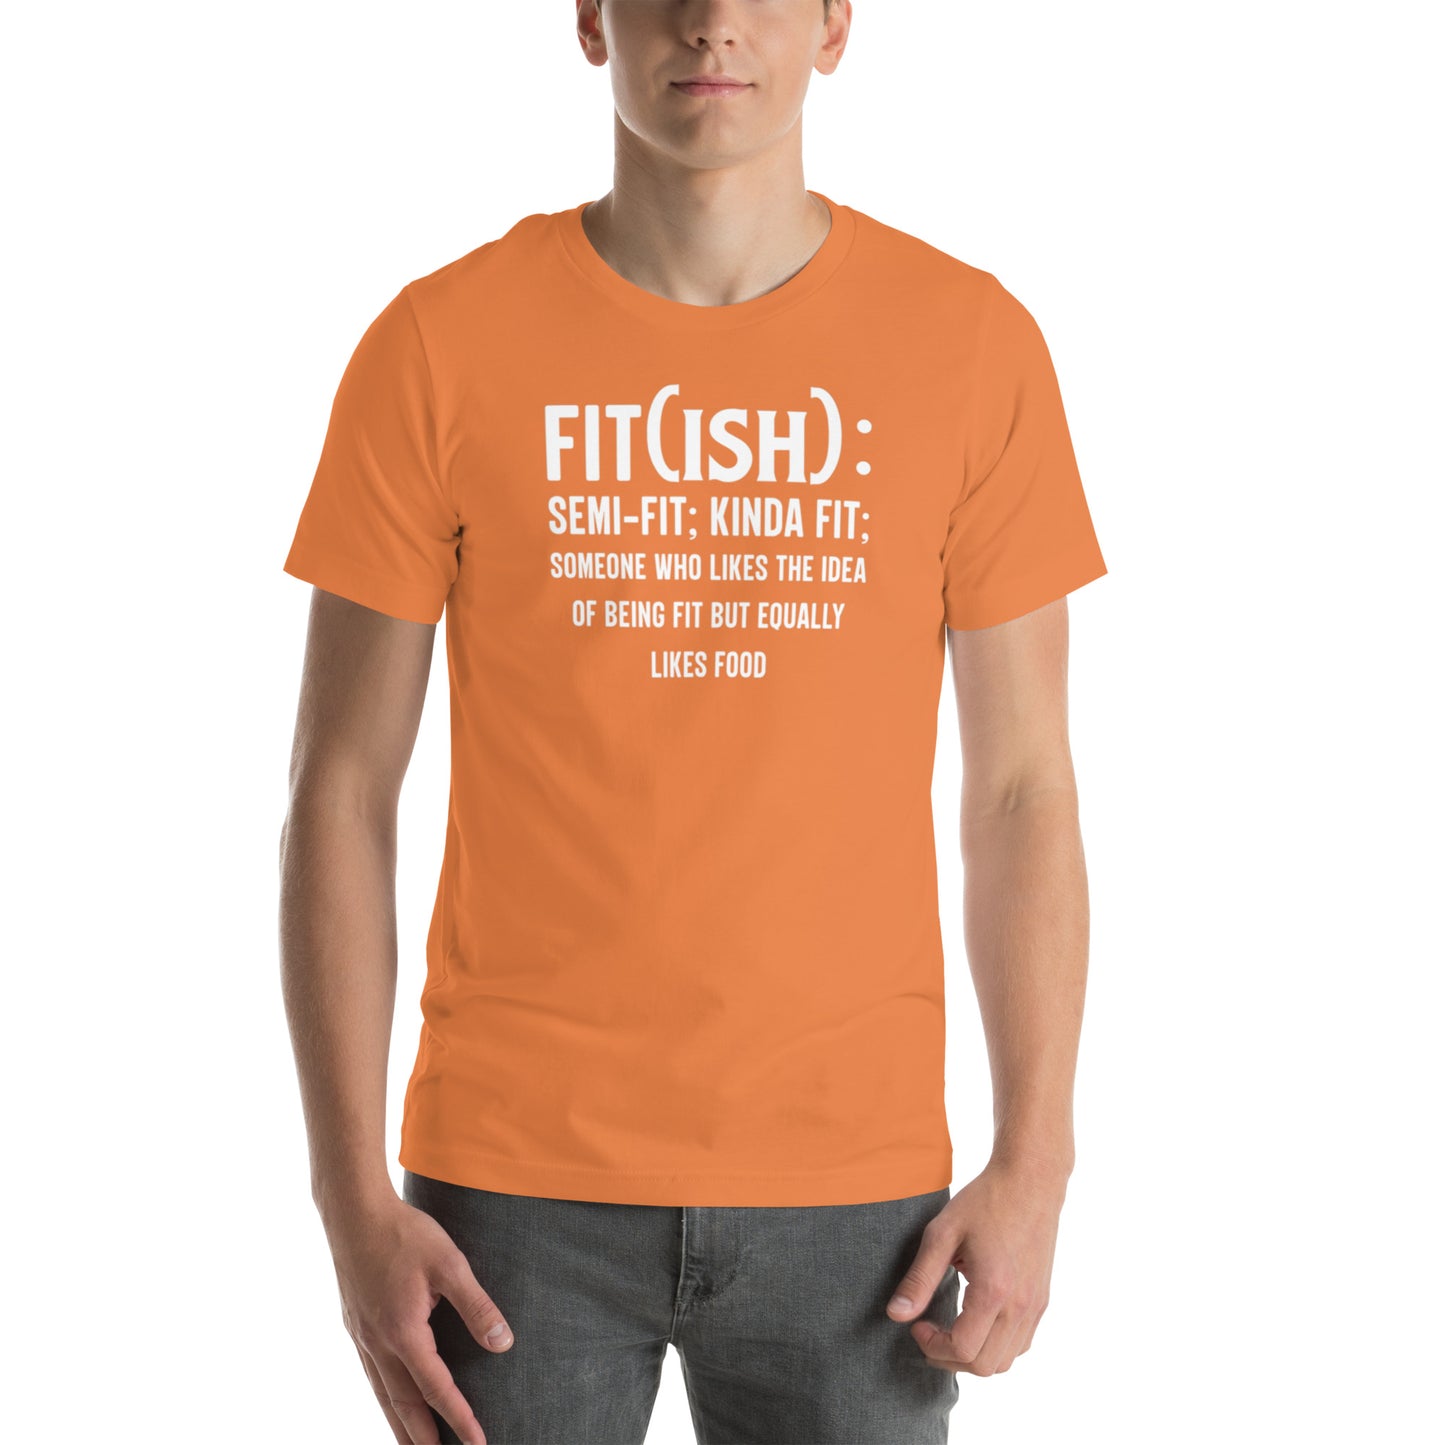 FIT (ish) Unisex t-shirt